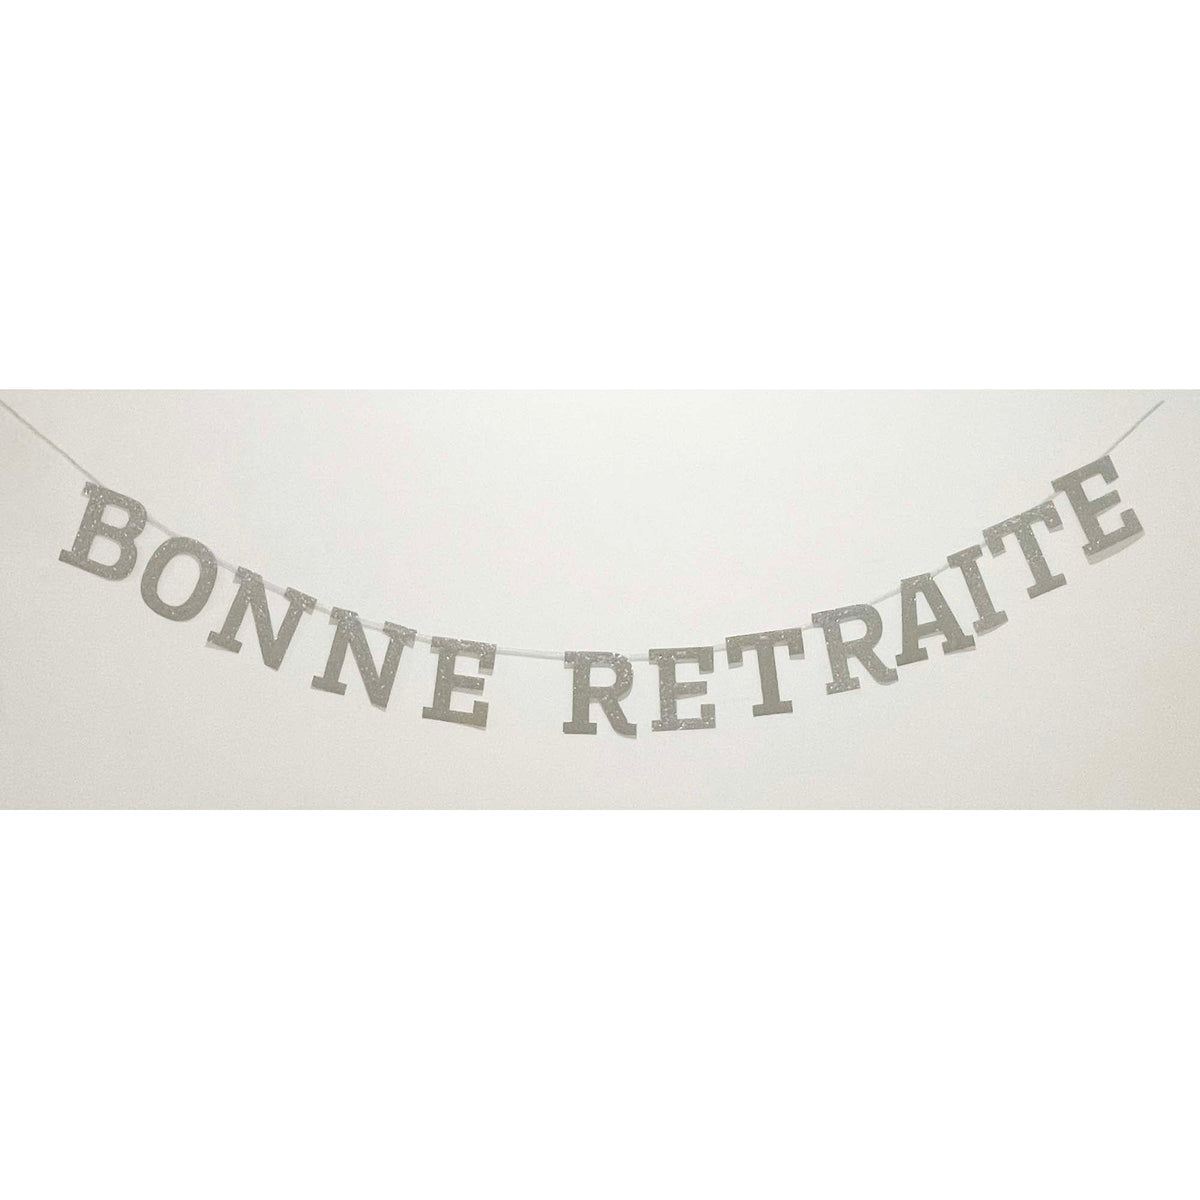 BK-Cowry Ningbo Trading CO Ltd Retirement Silver "Bonne Retraite" Letter Banner, 94 Inches, 1 Count